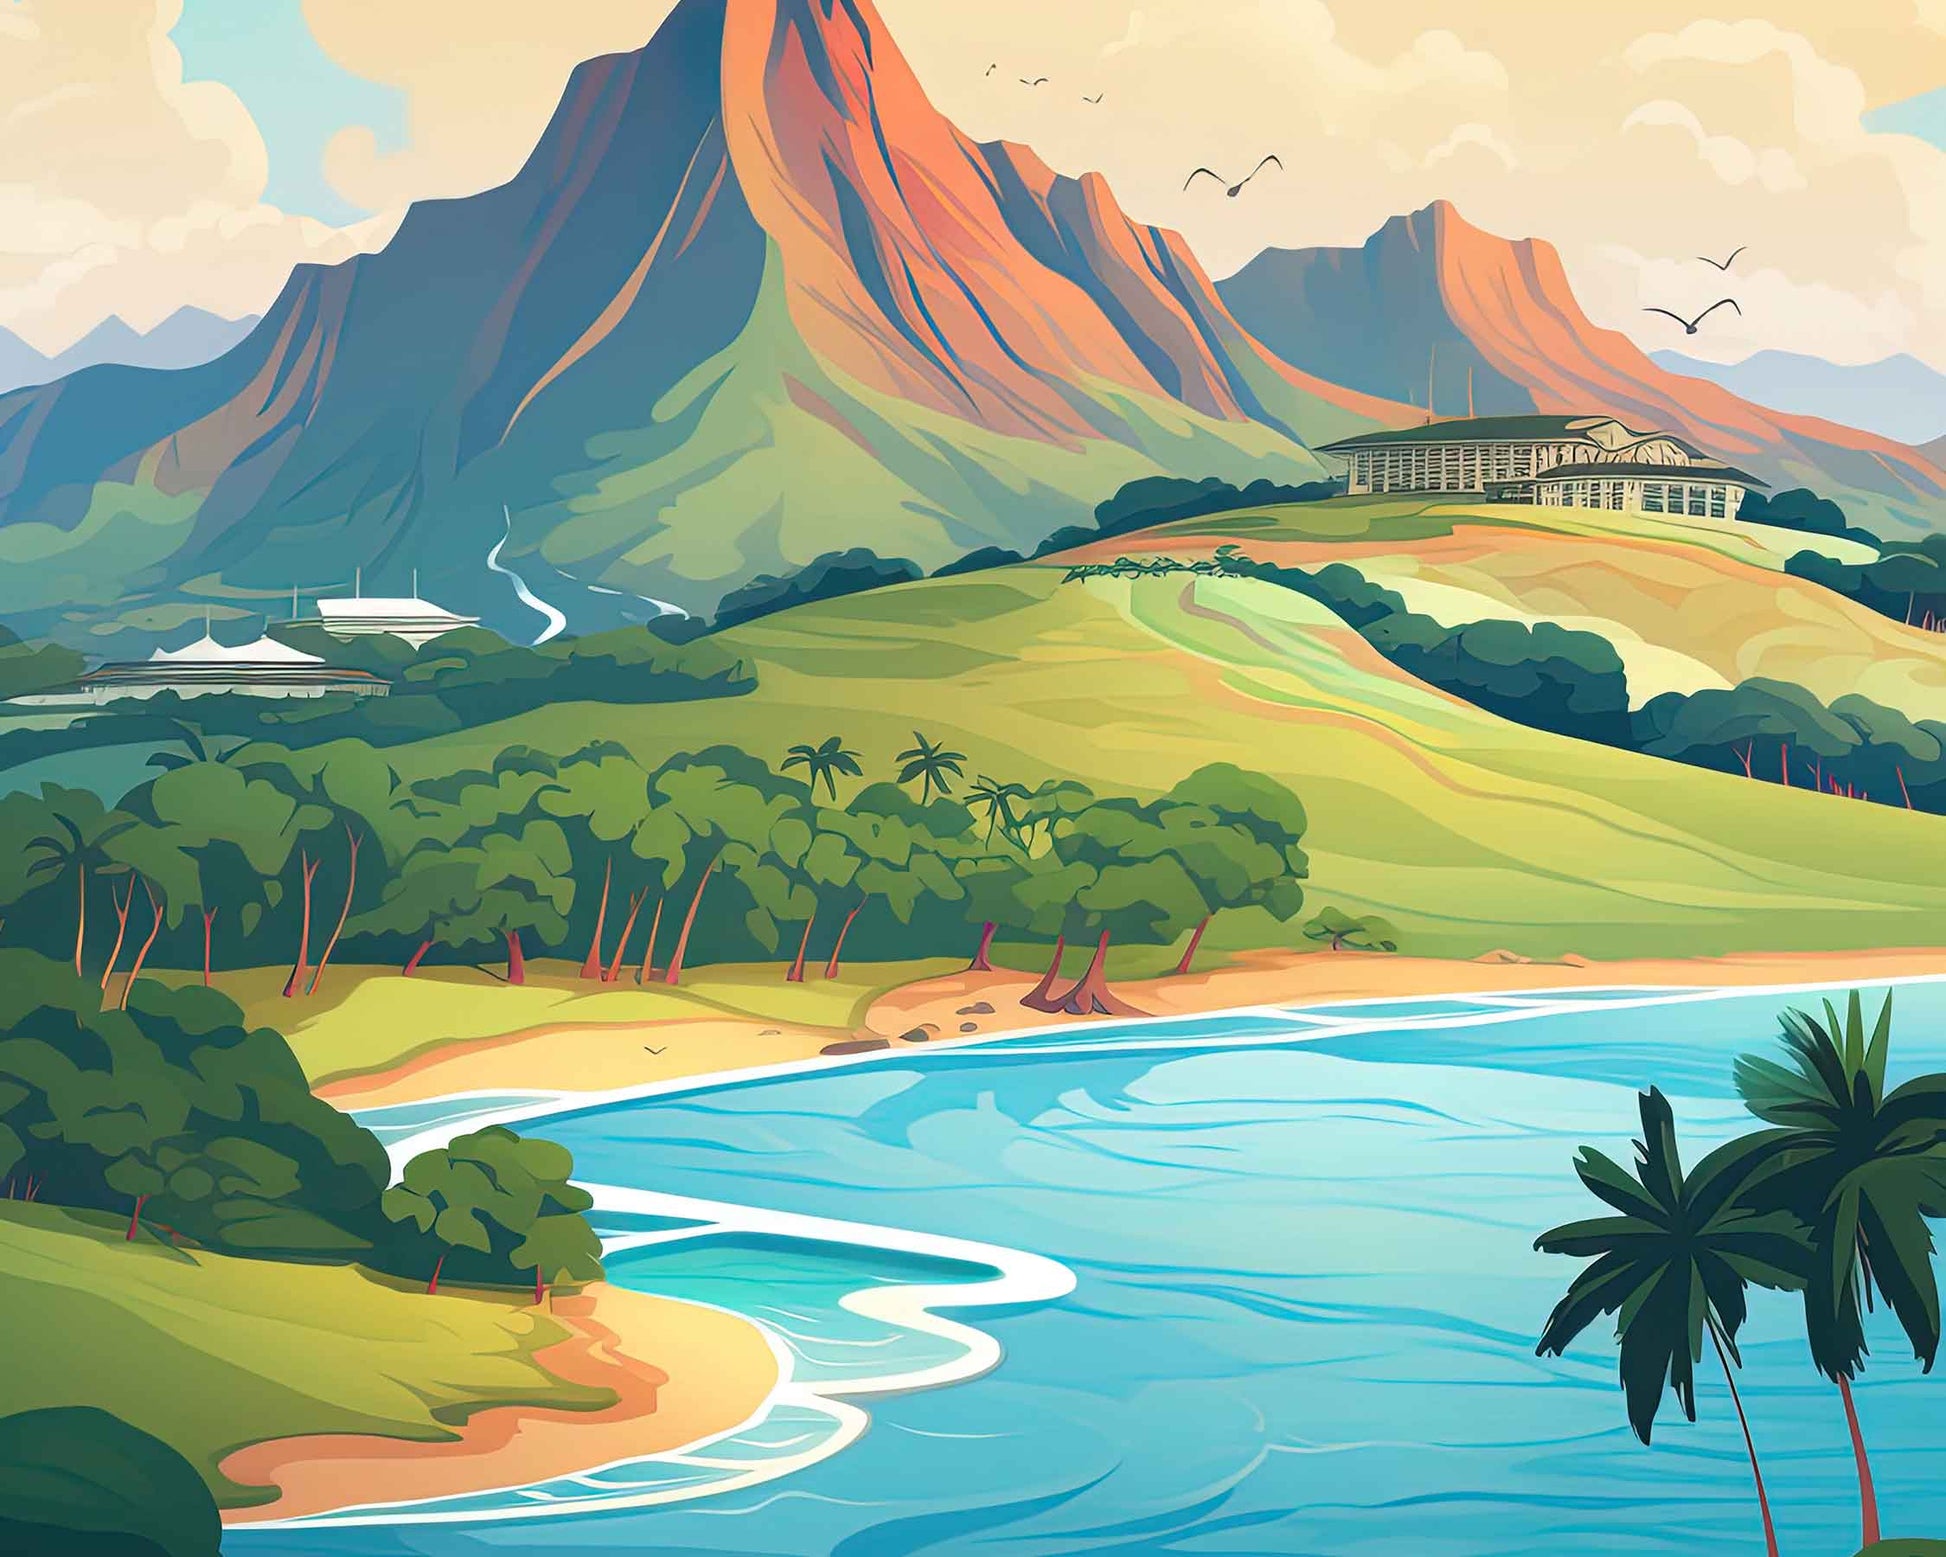 Framed Image of Oahu Hawaii Travel Poster Prints Wall Art Illustration